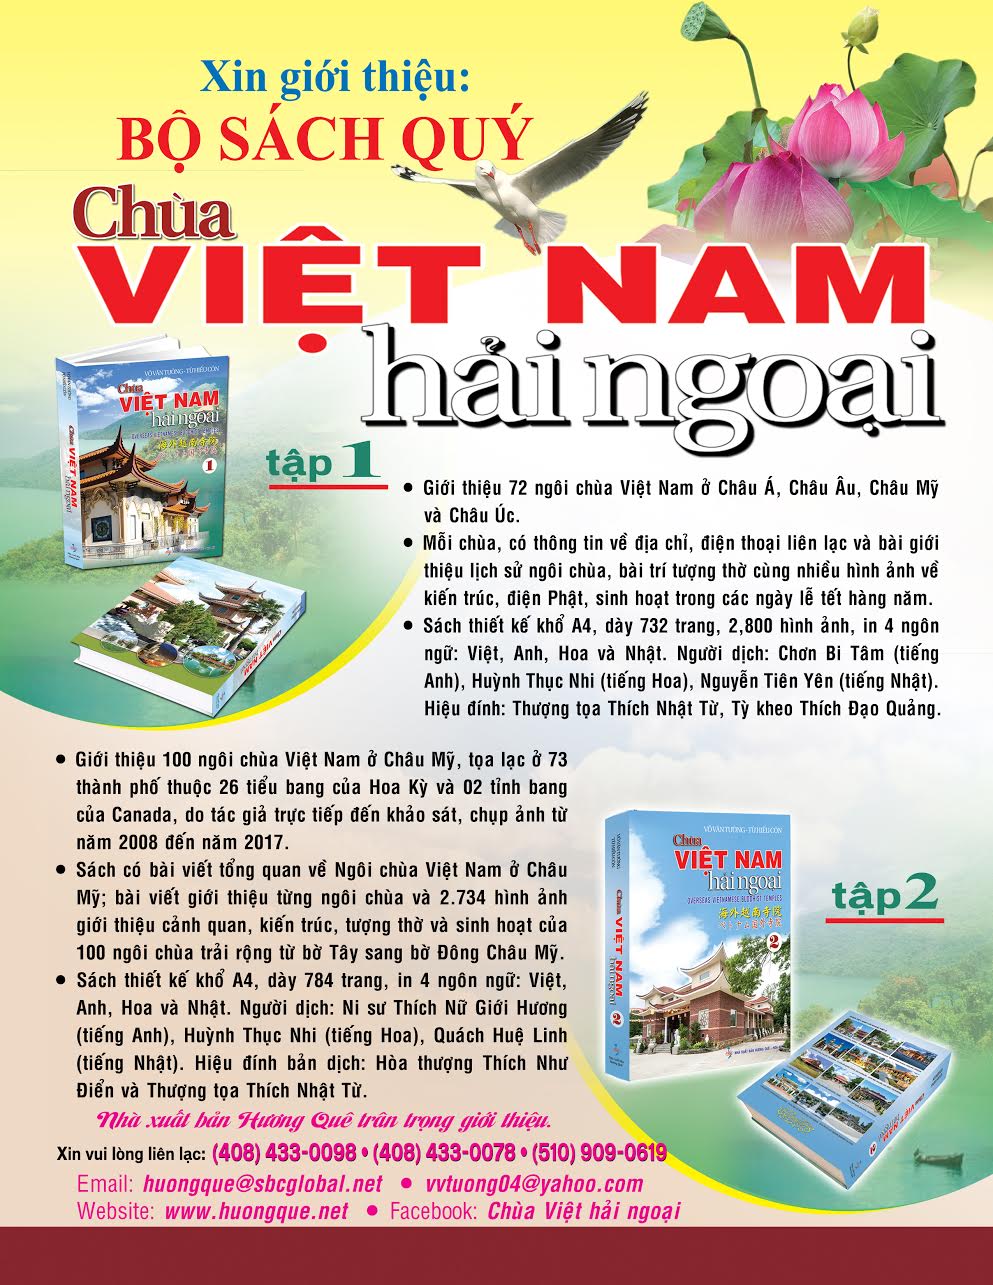 Chua Viet Nam Hai Ngoai tap 2